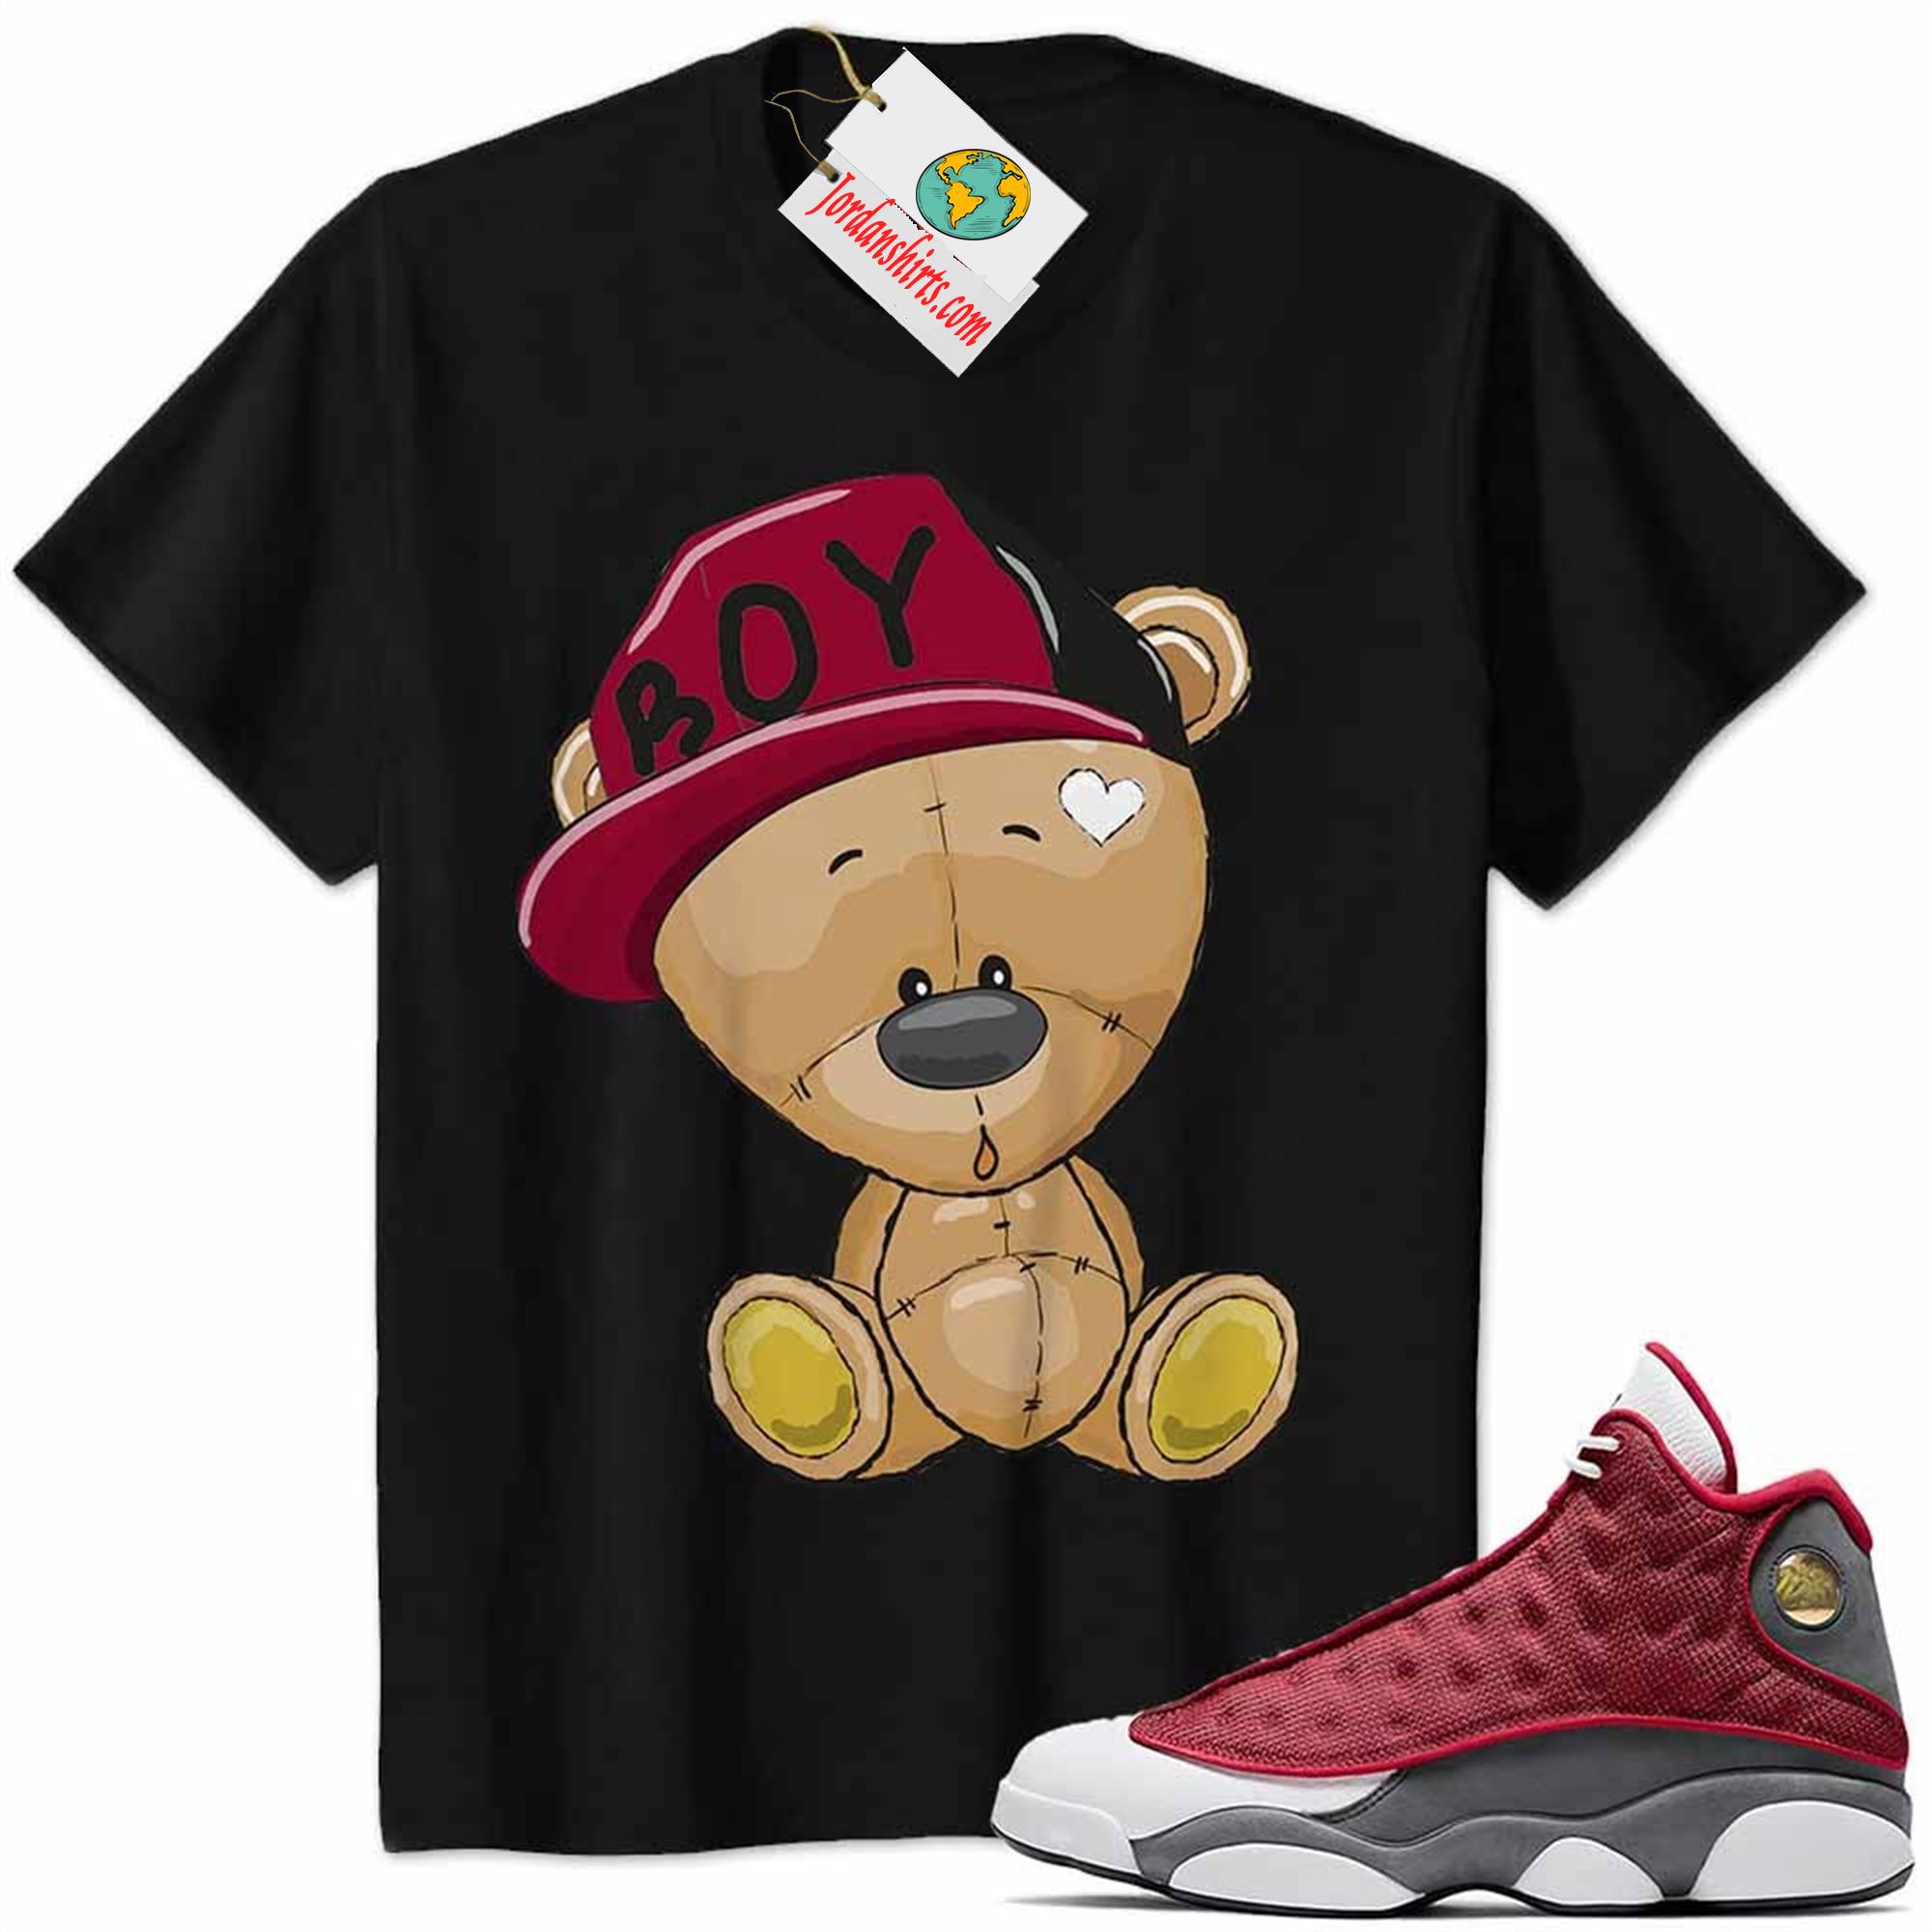 Jordan 13 Shirt, Jordan 13 Red Flint Shirt Cute Baby Teddy Bear Black Plus Size Up To 5xl